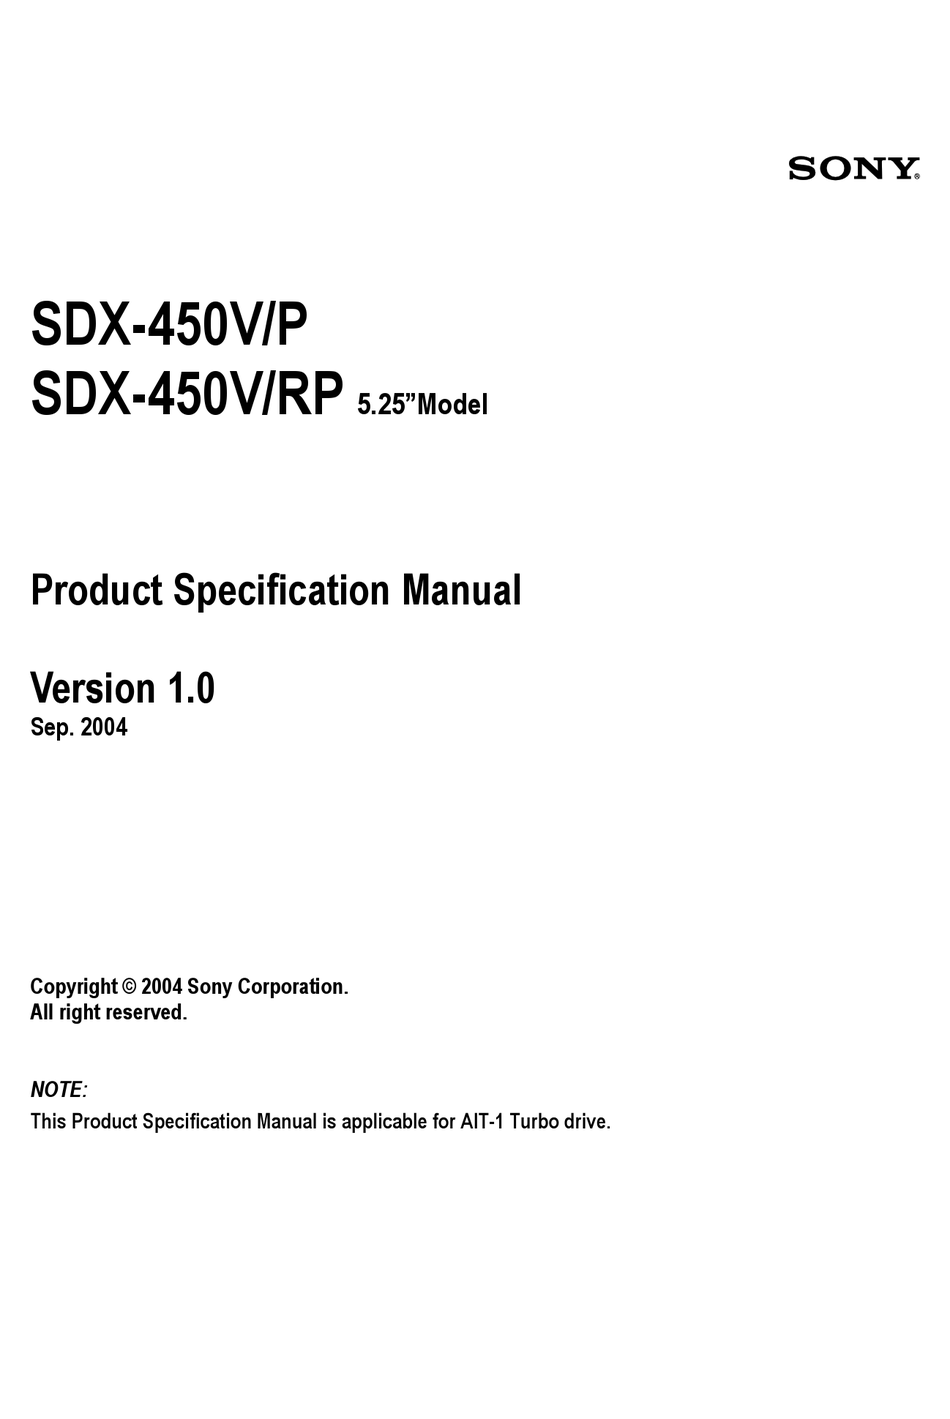 sdx-450v final error history